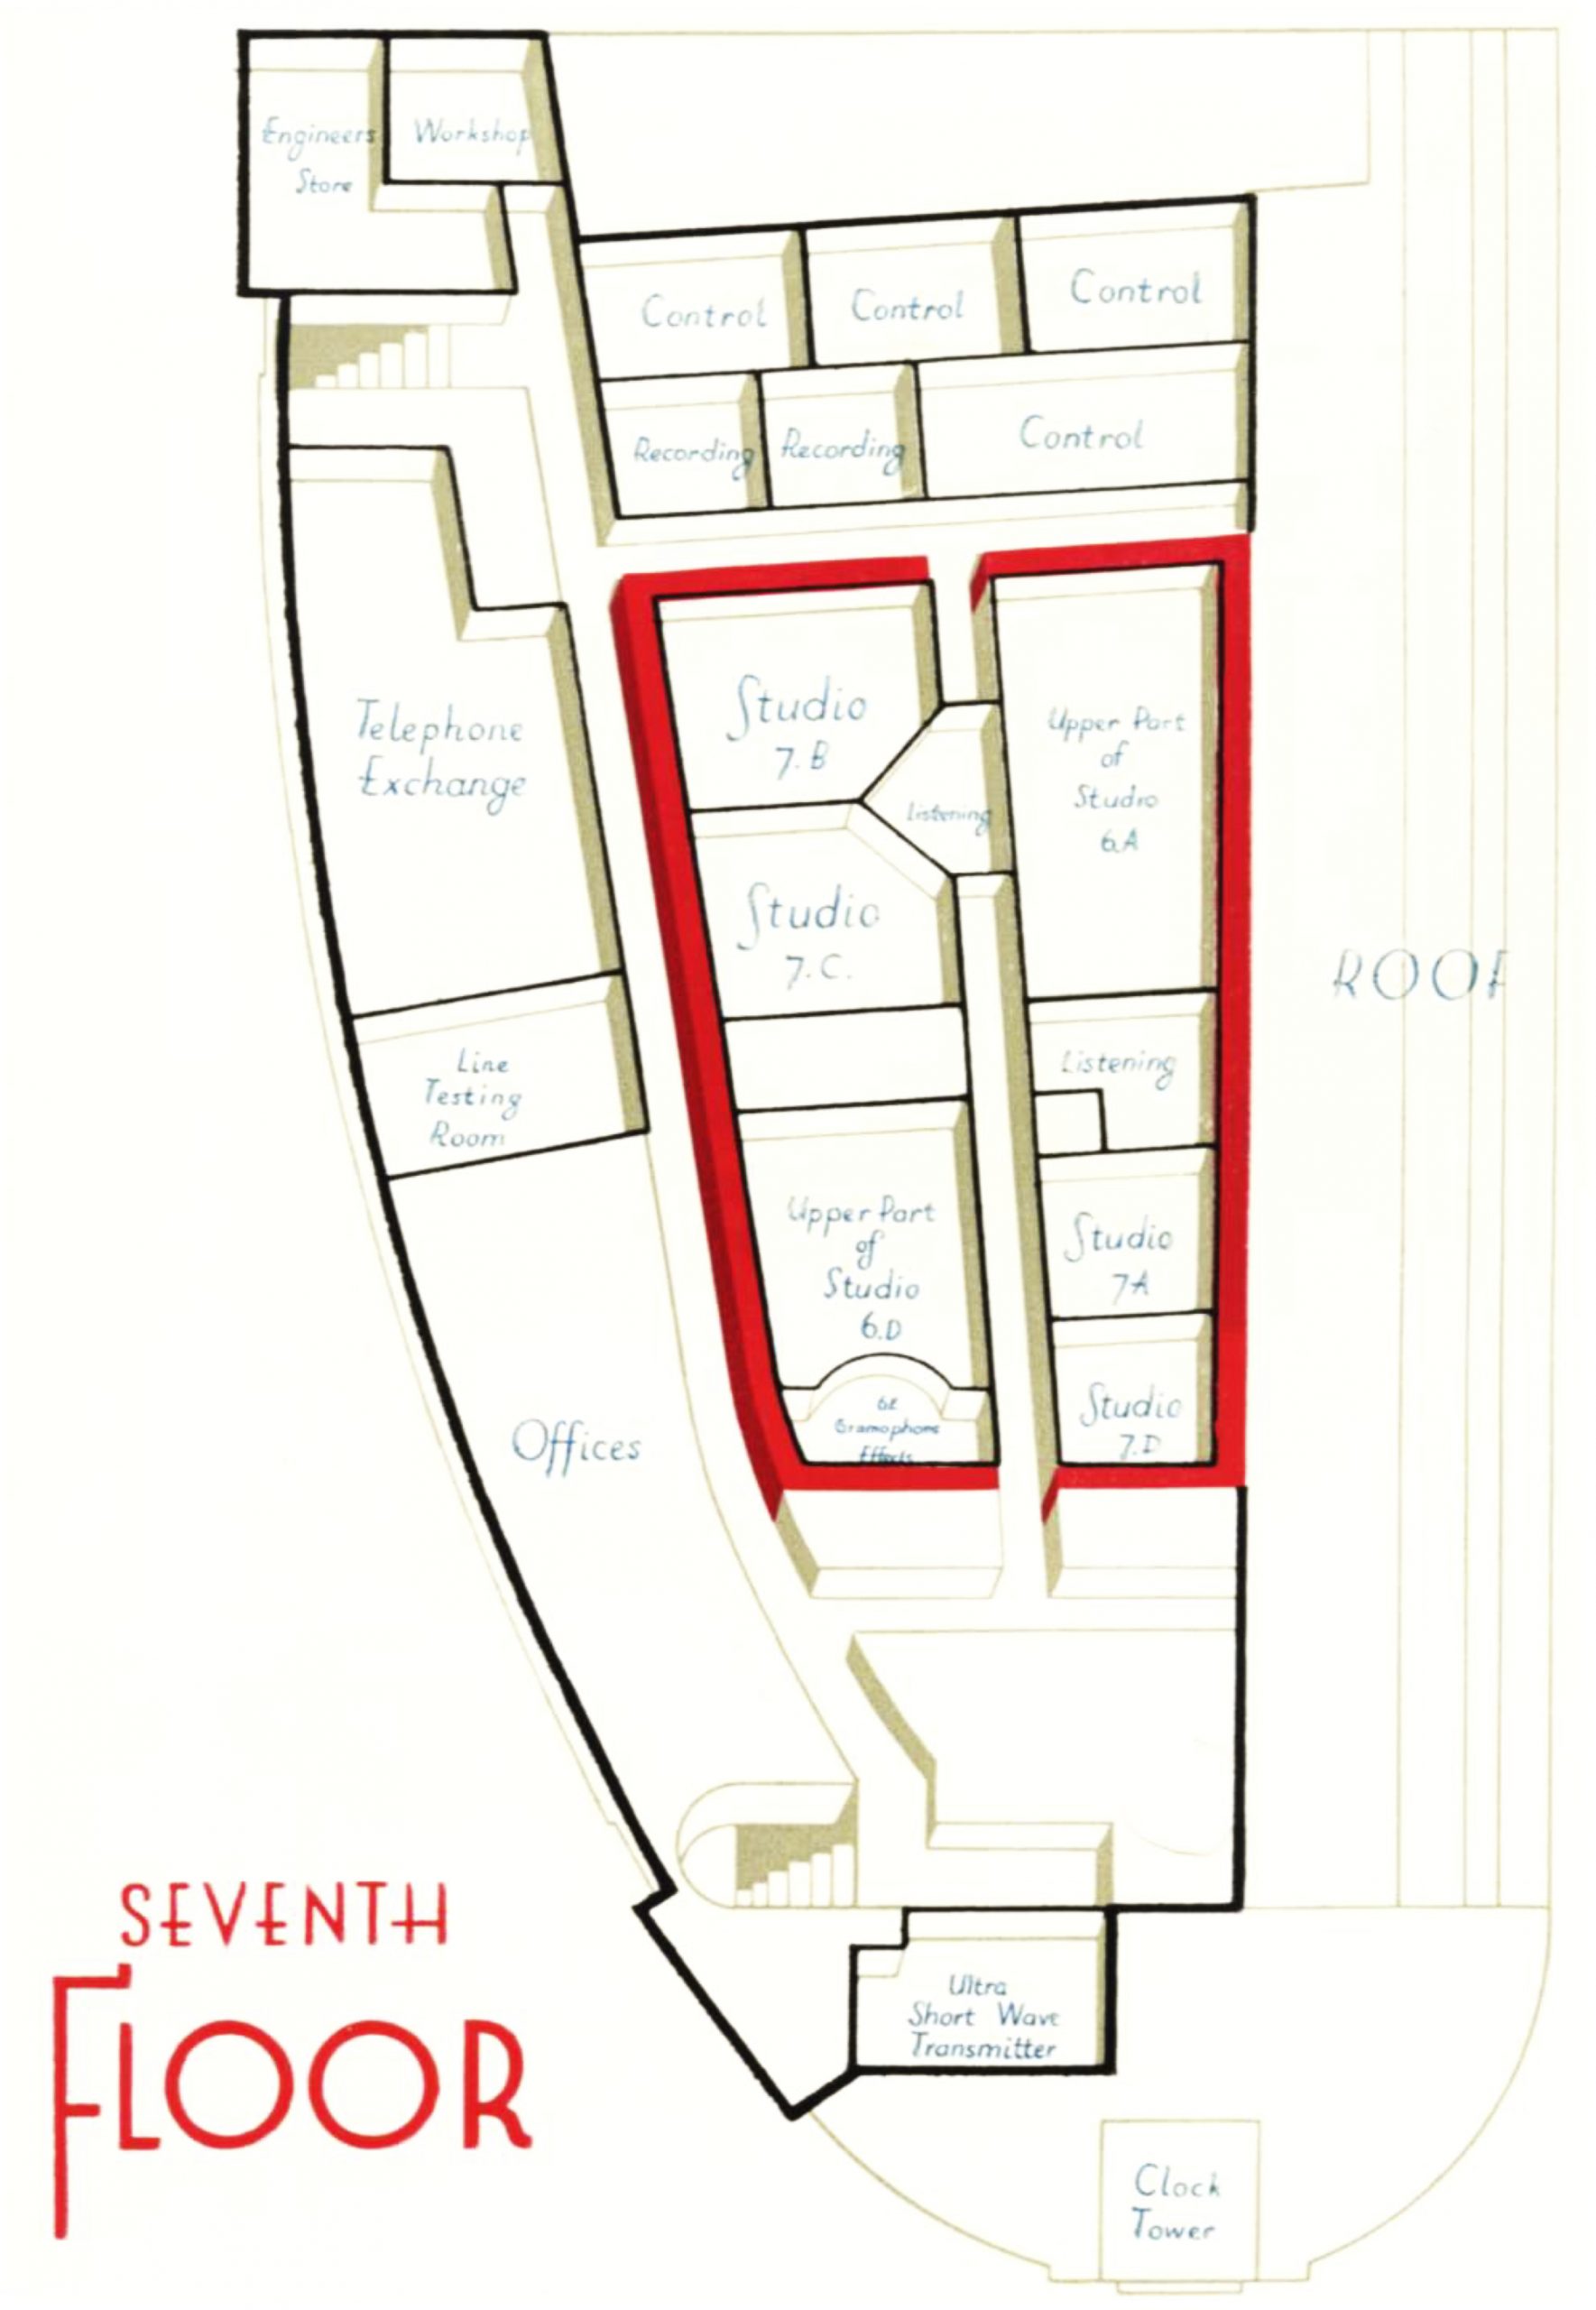 Diagram of the 7th floor